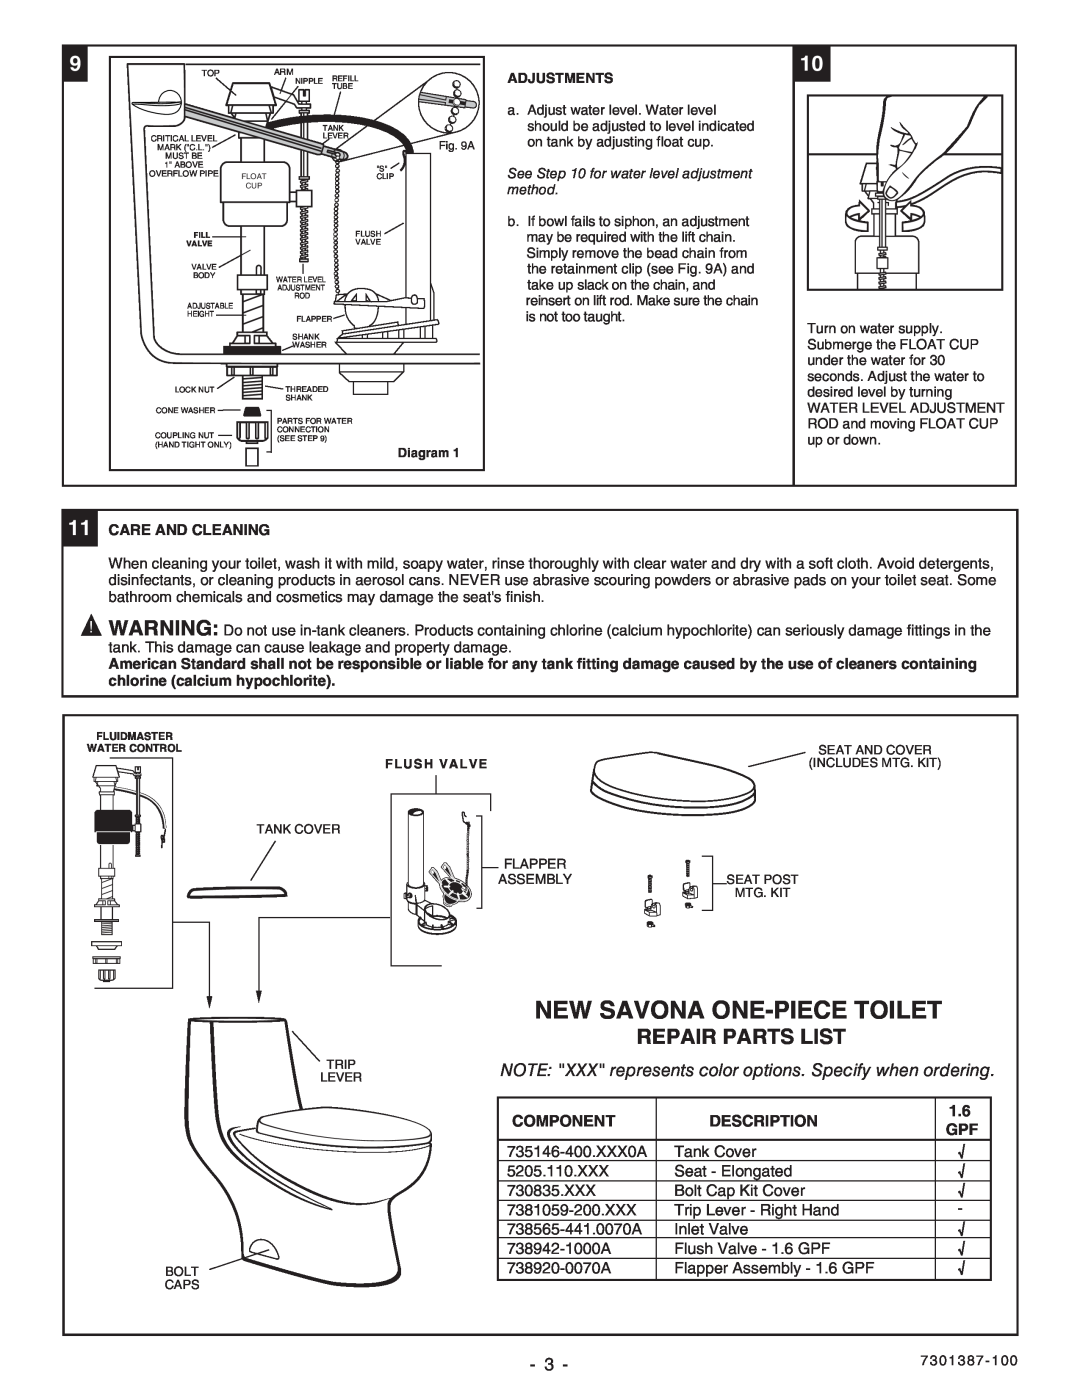 American Standard 2097.012 installation instructions New Savona One-Piece Toilet, Repair Parts List, Component, Description 